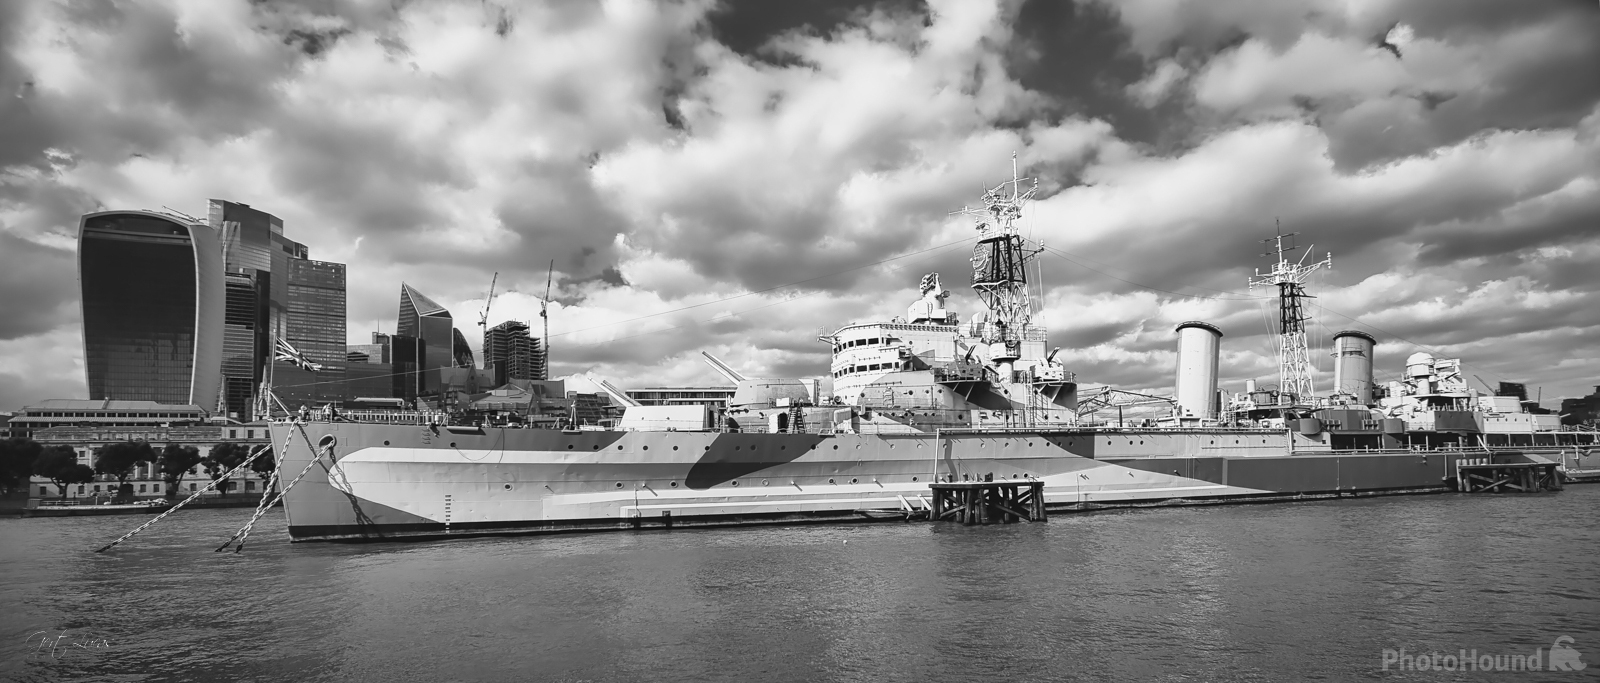 Image of HMS Belfast by Gert Lucas